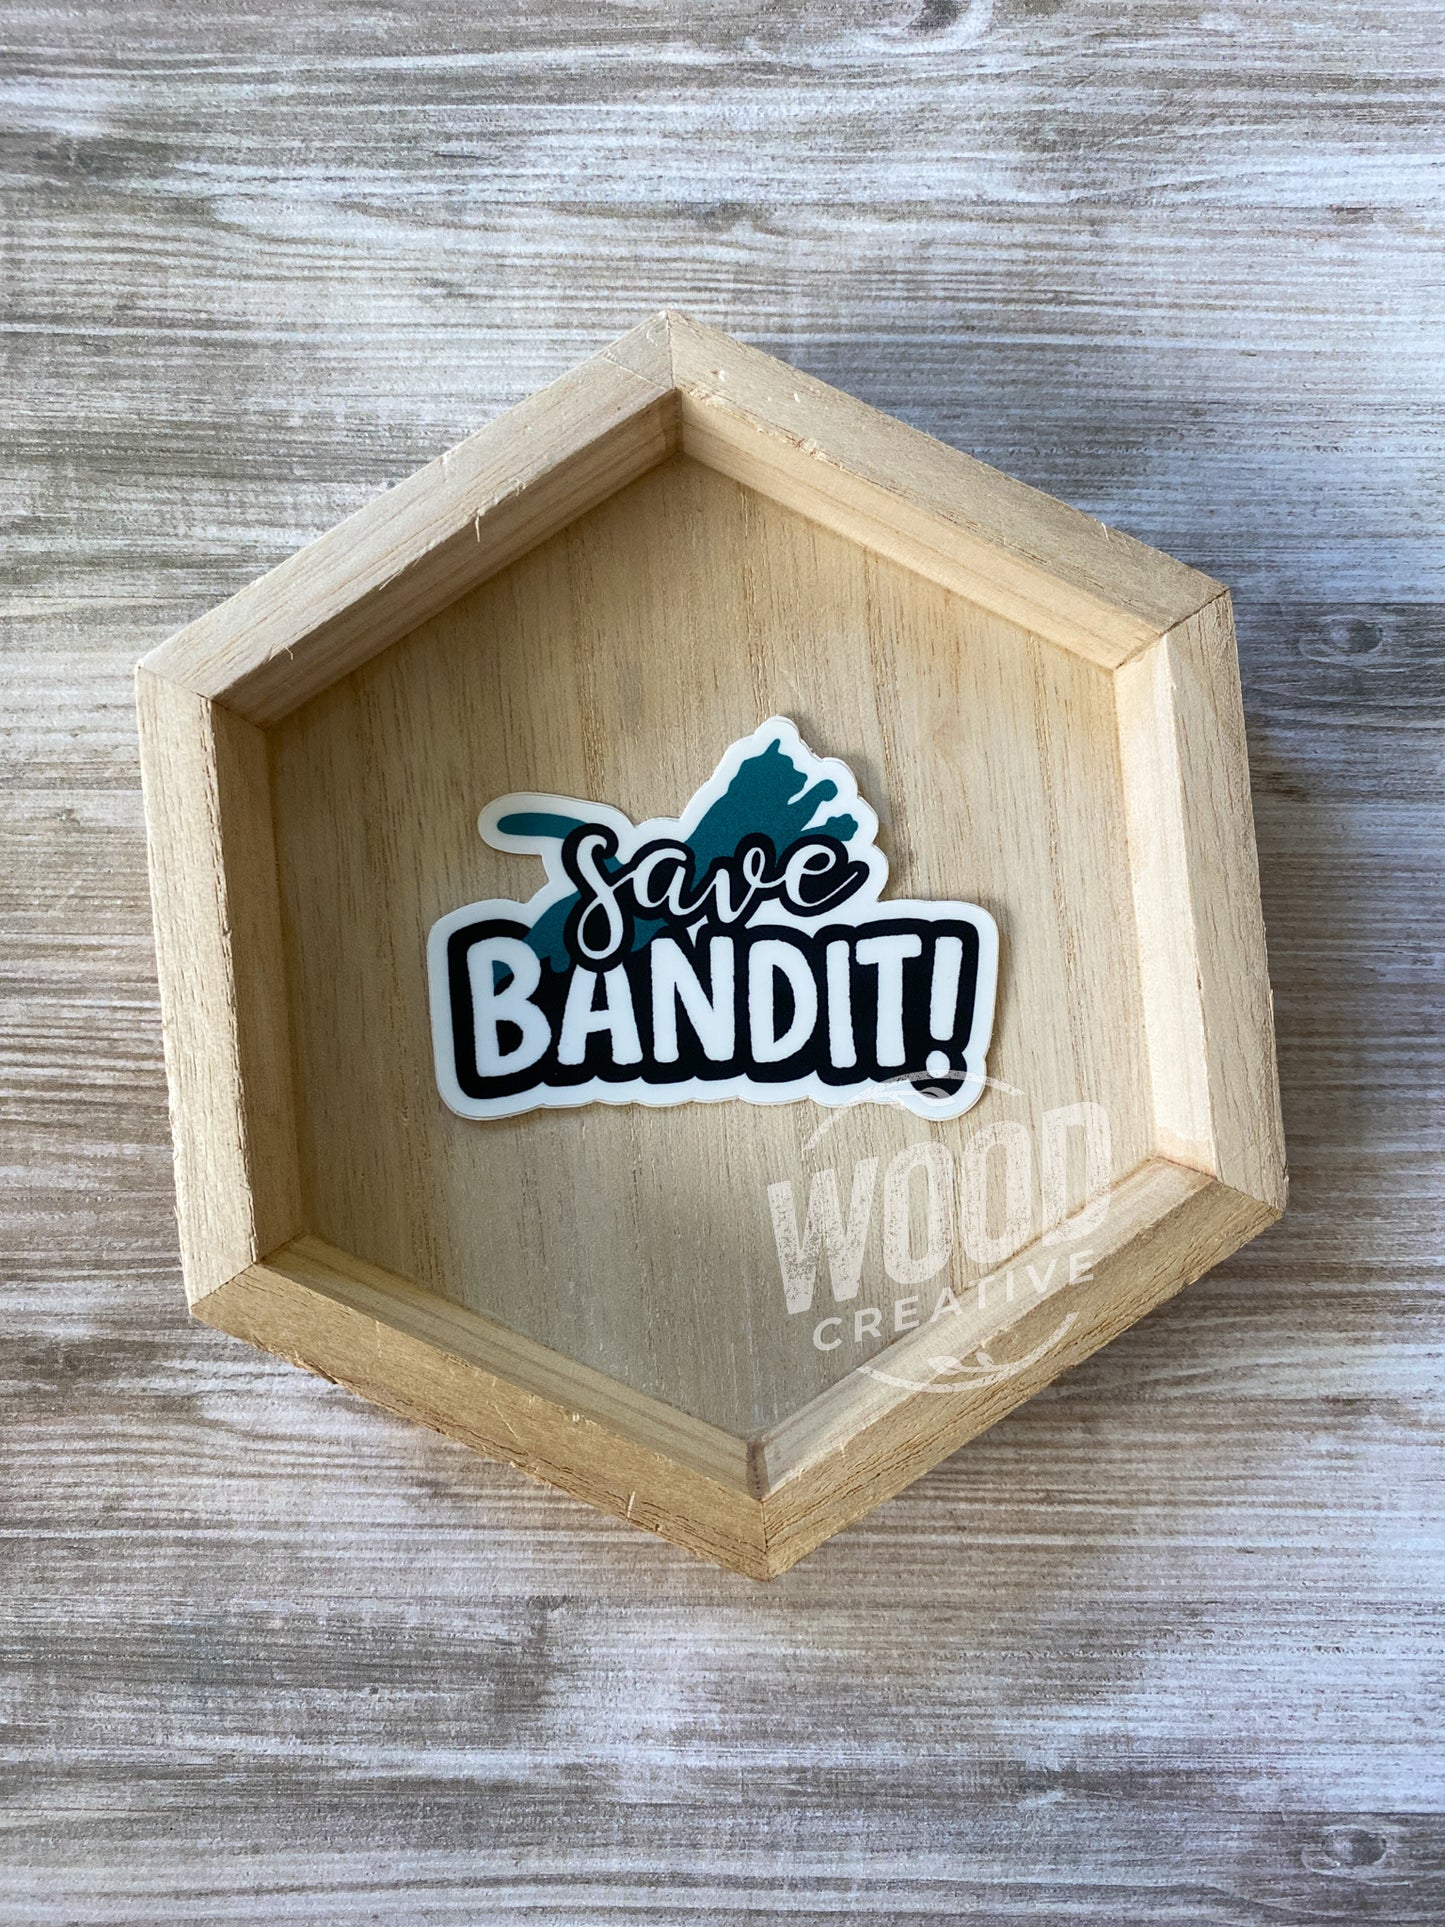 Save Bandit! High Quality Vinyl Sticker